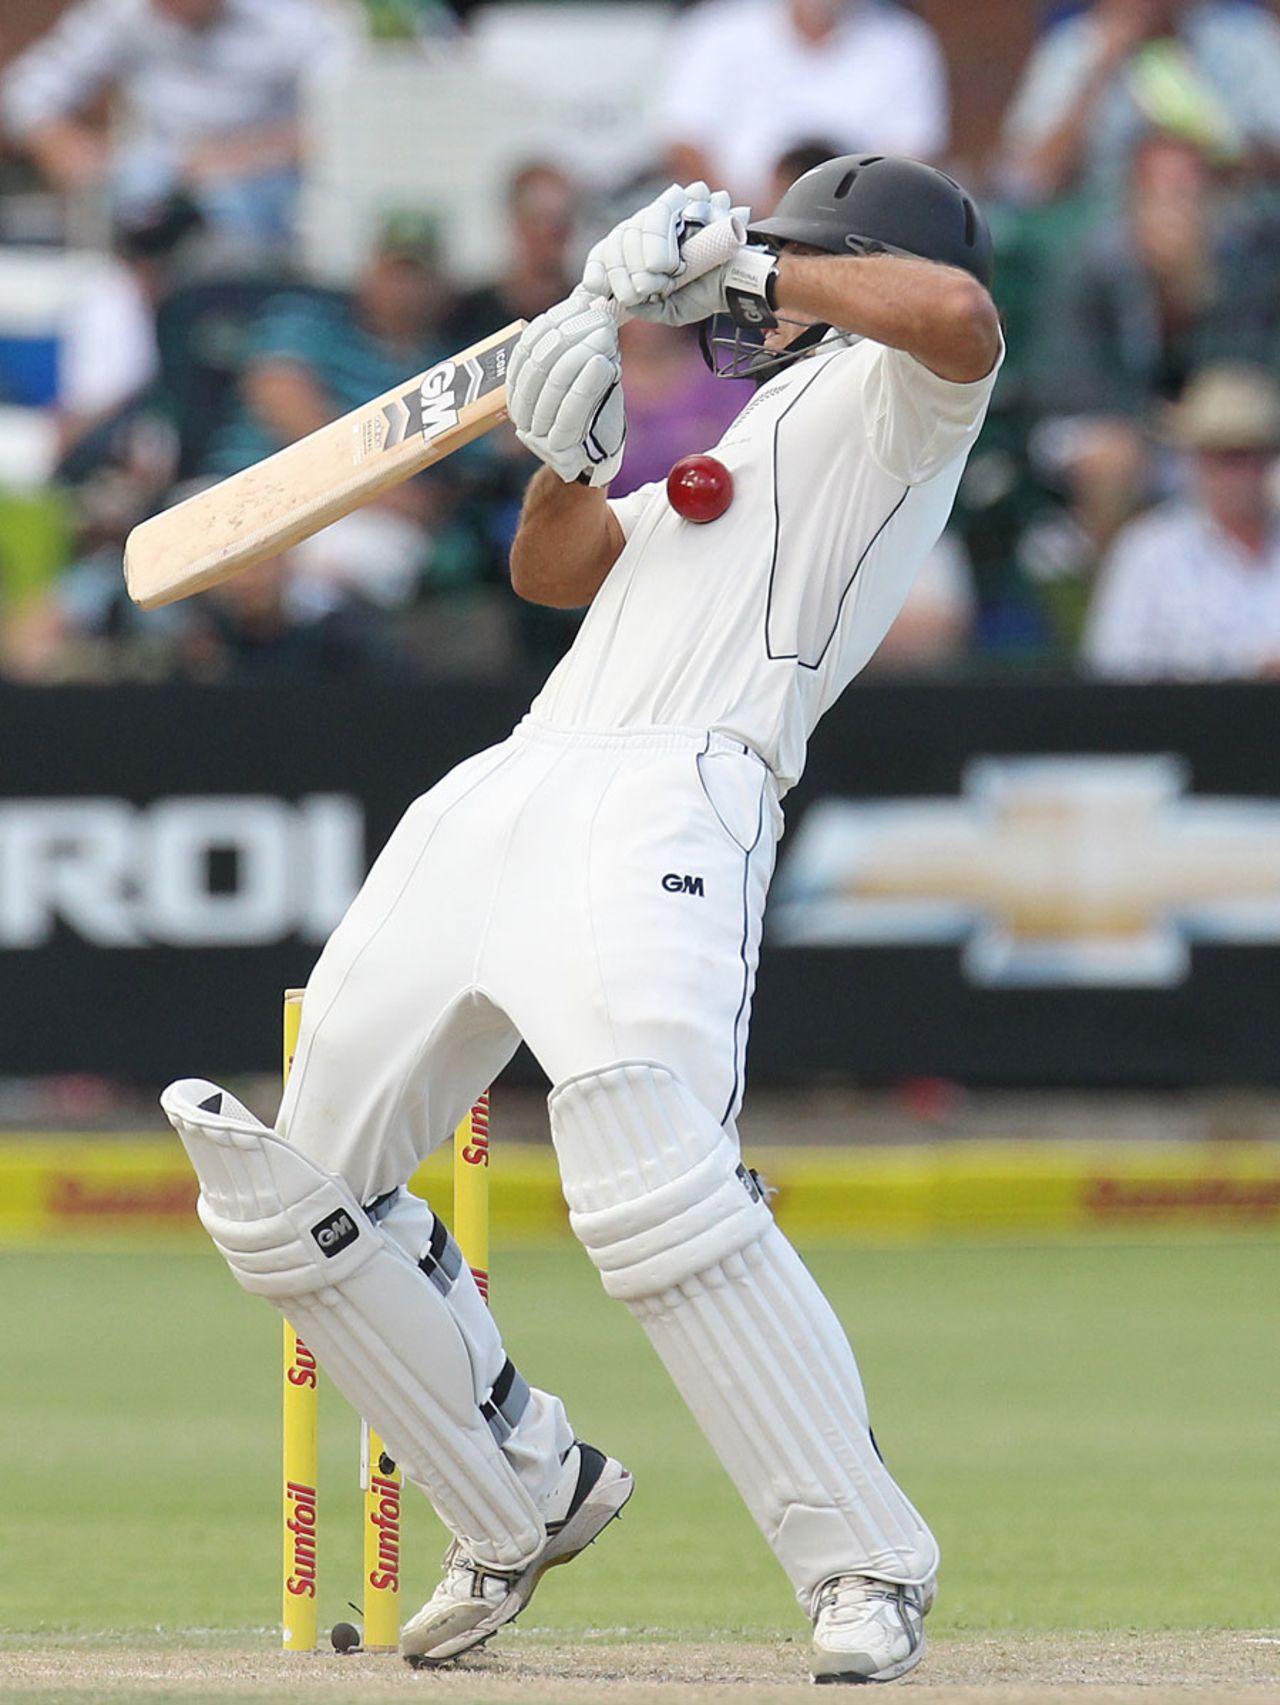 Dean Brownlie gets struck by a short ball, South Africa v New Zealand, 2nd Test, Port Elizabeth, 2nd day, January 12, 2013